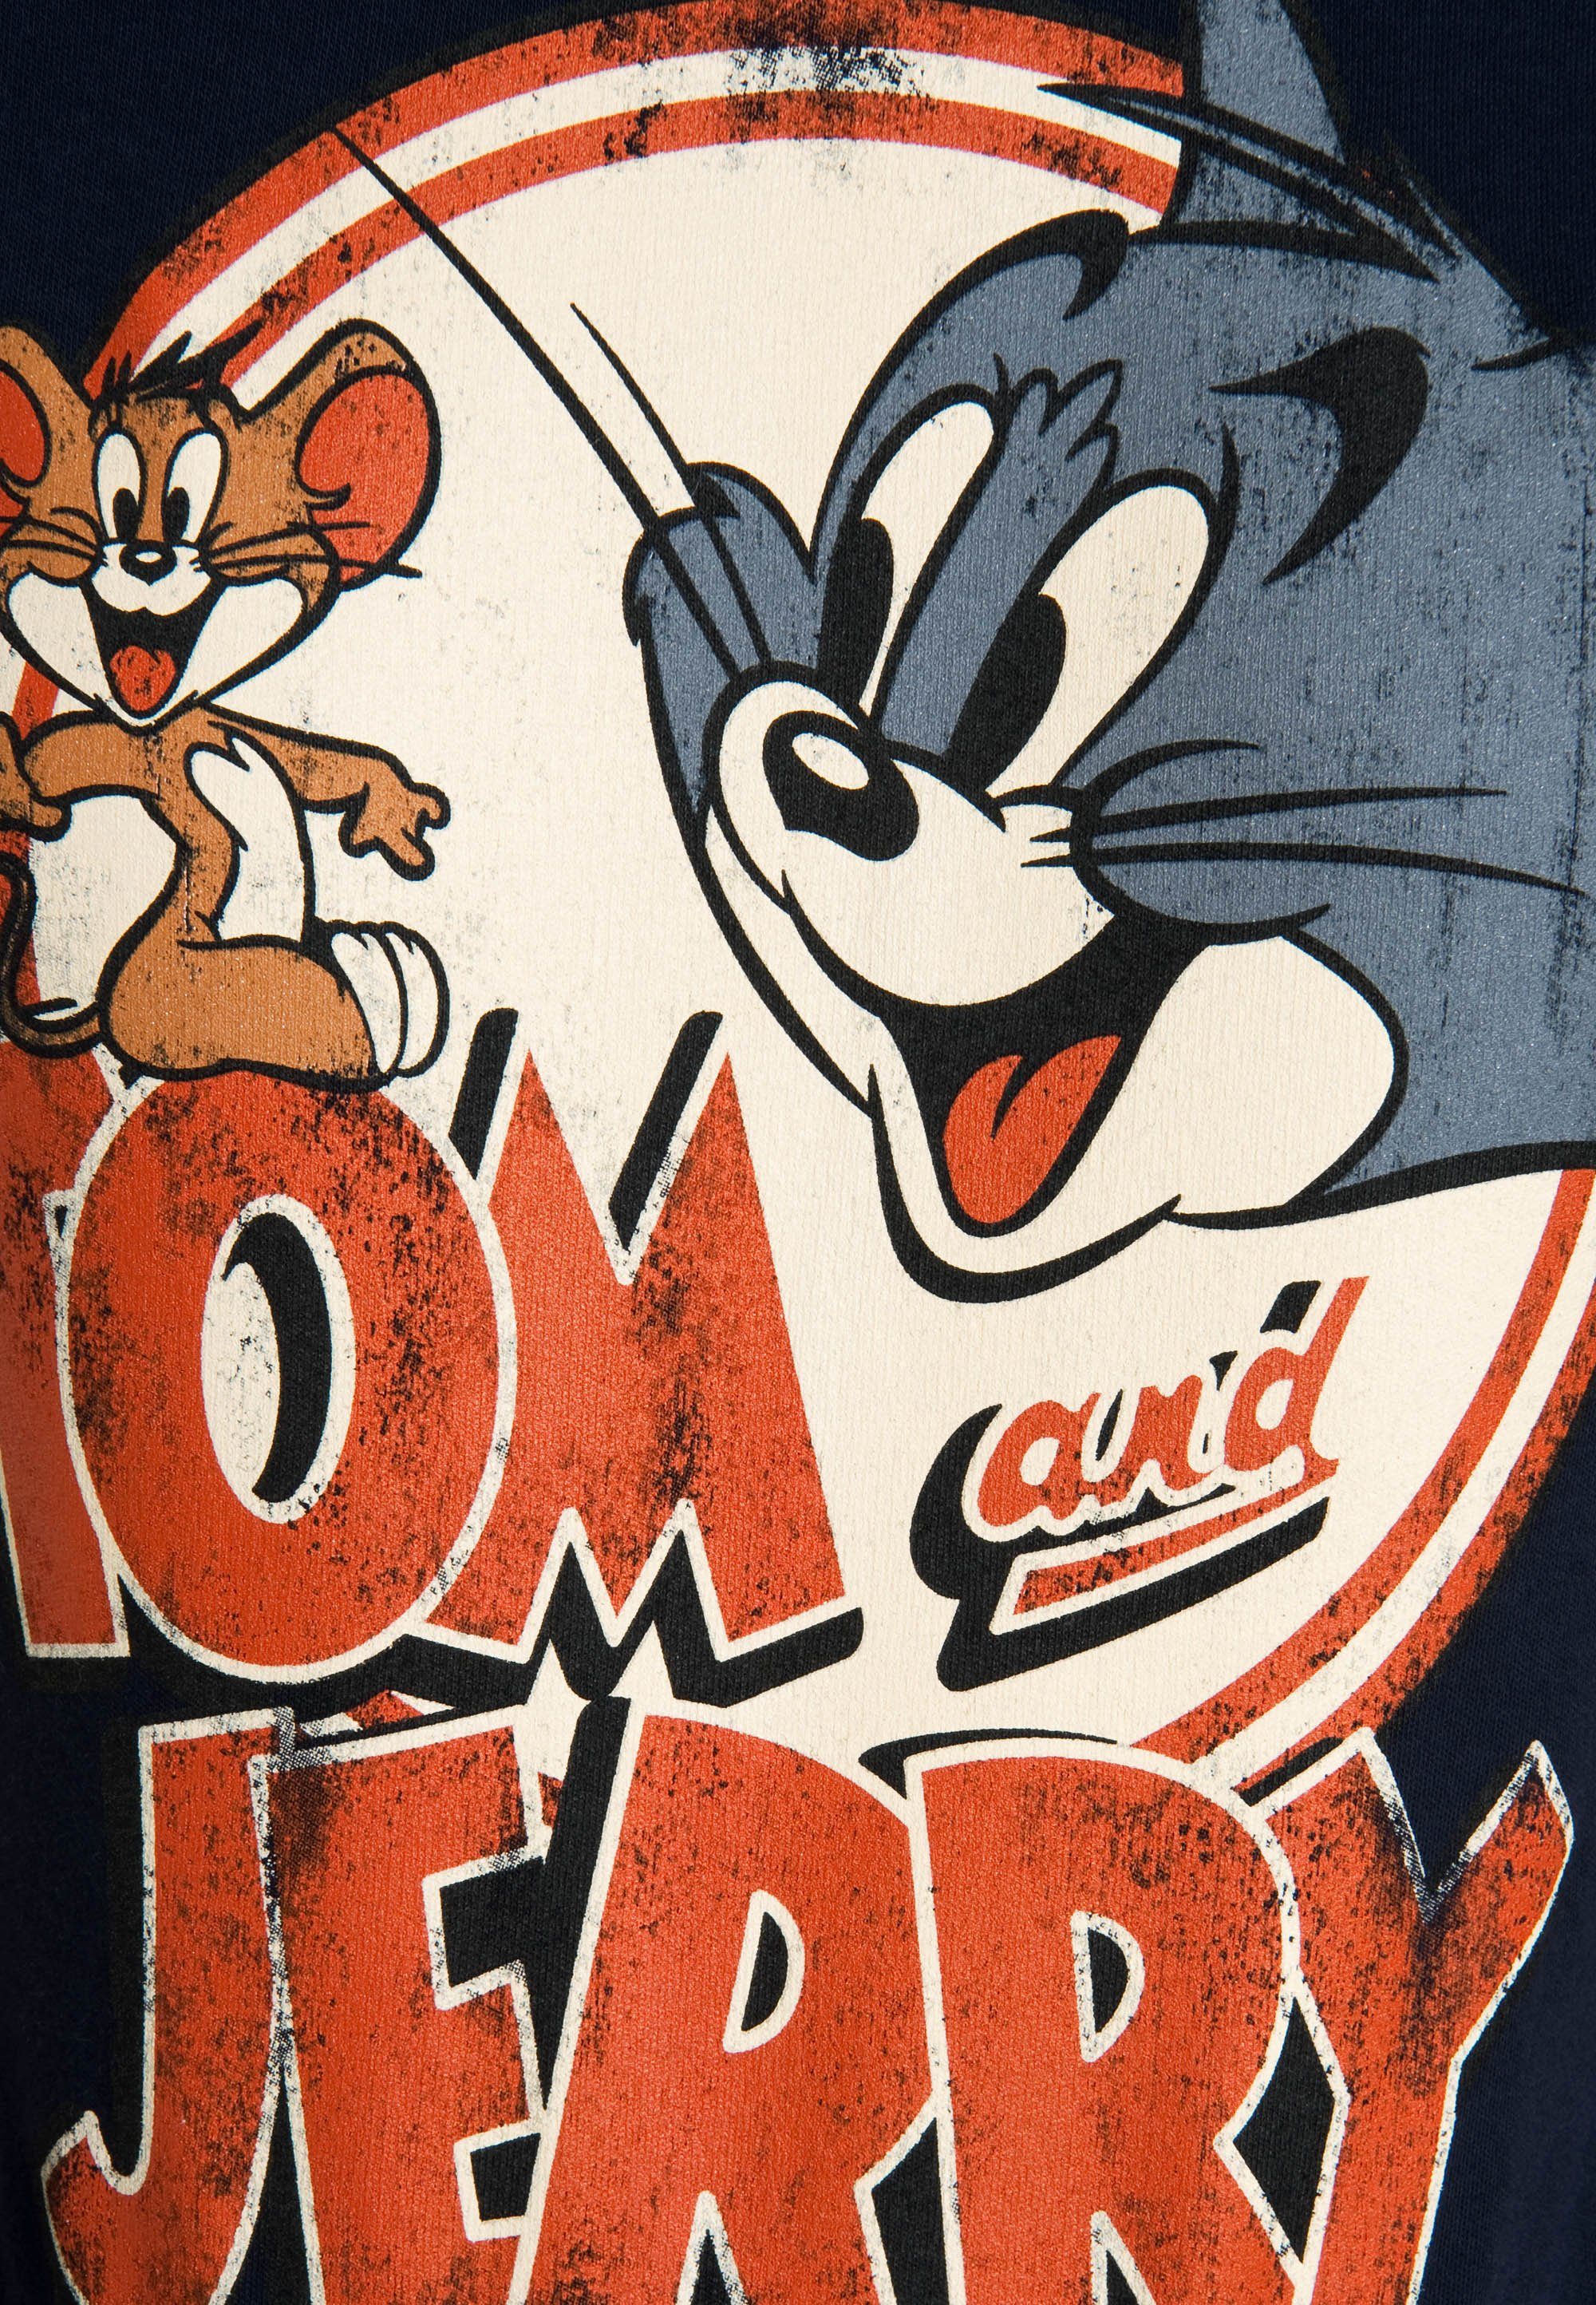 Tom & lizenziertem T-Shirt schwarz LOGOSHIRT mit Jerry Originaldesign